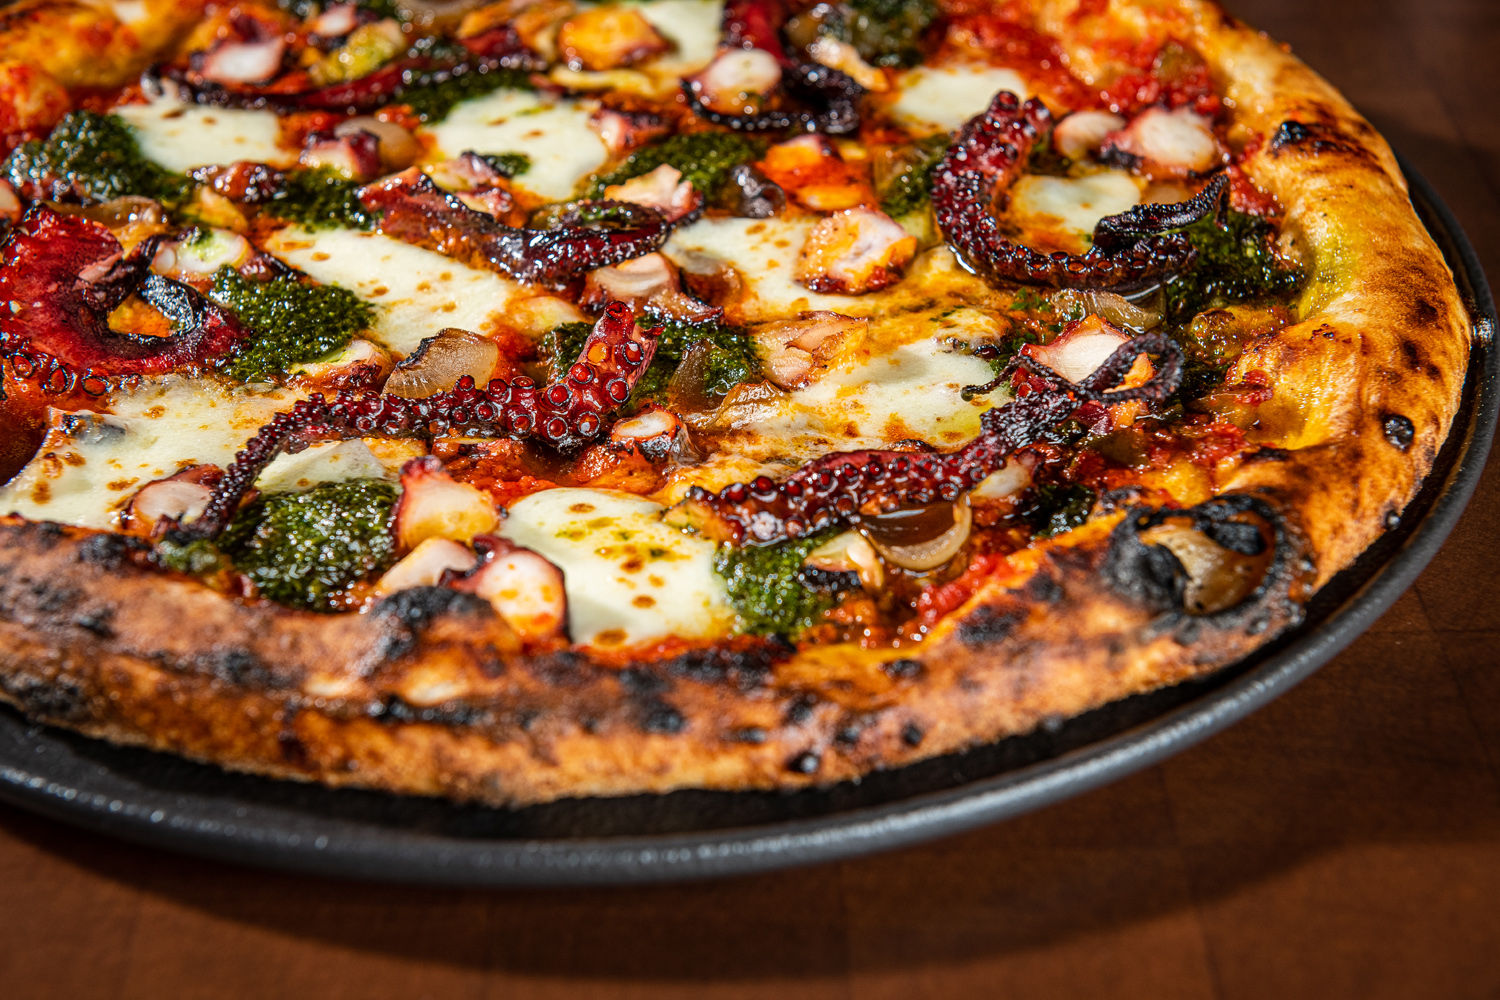 Octaroni pizza with pomodoro, smoked octopus, Caciocavallo cheese and basil pesto from L'Ardente restaurant in Washington, DC